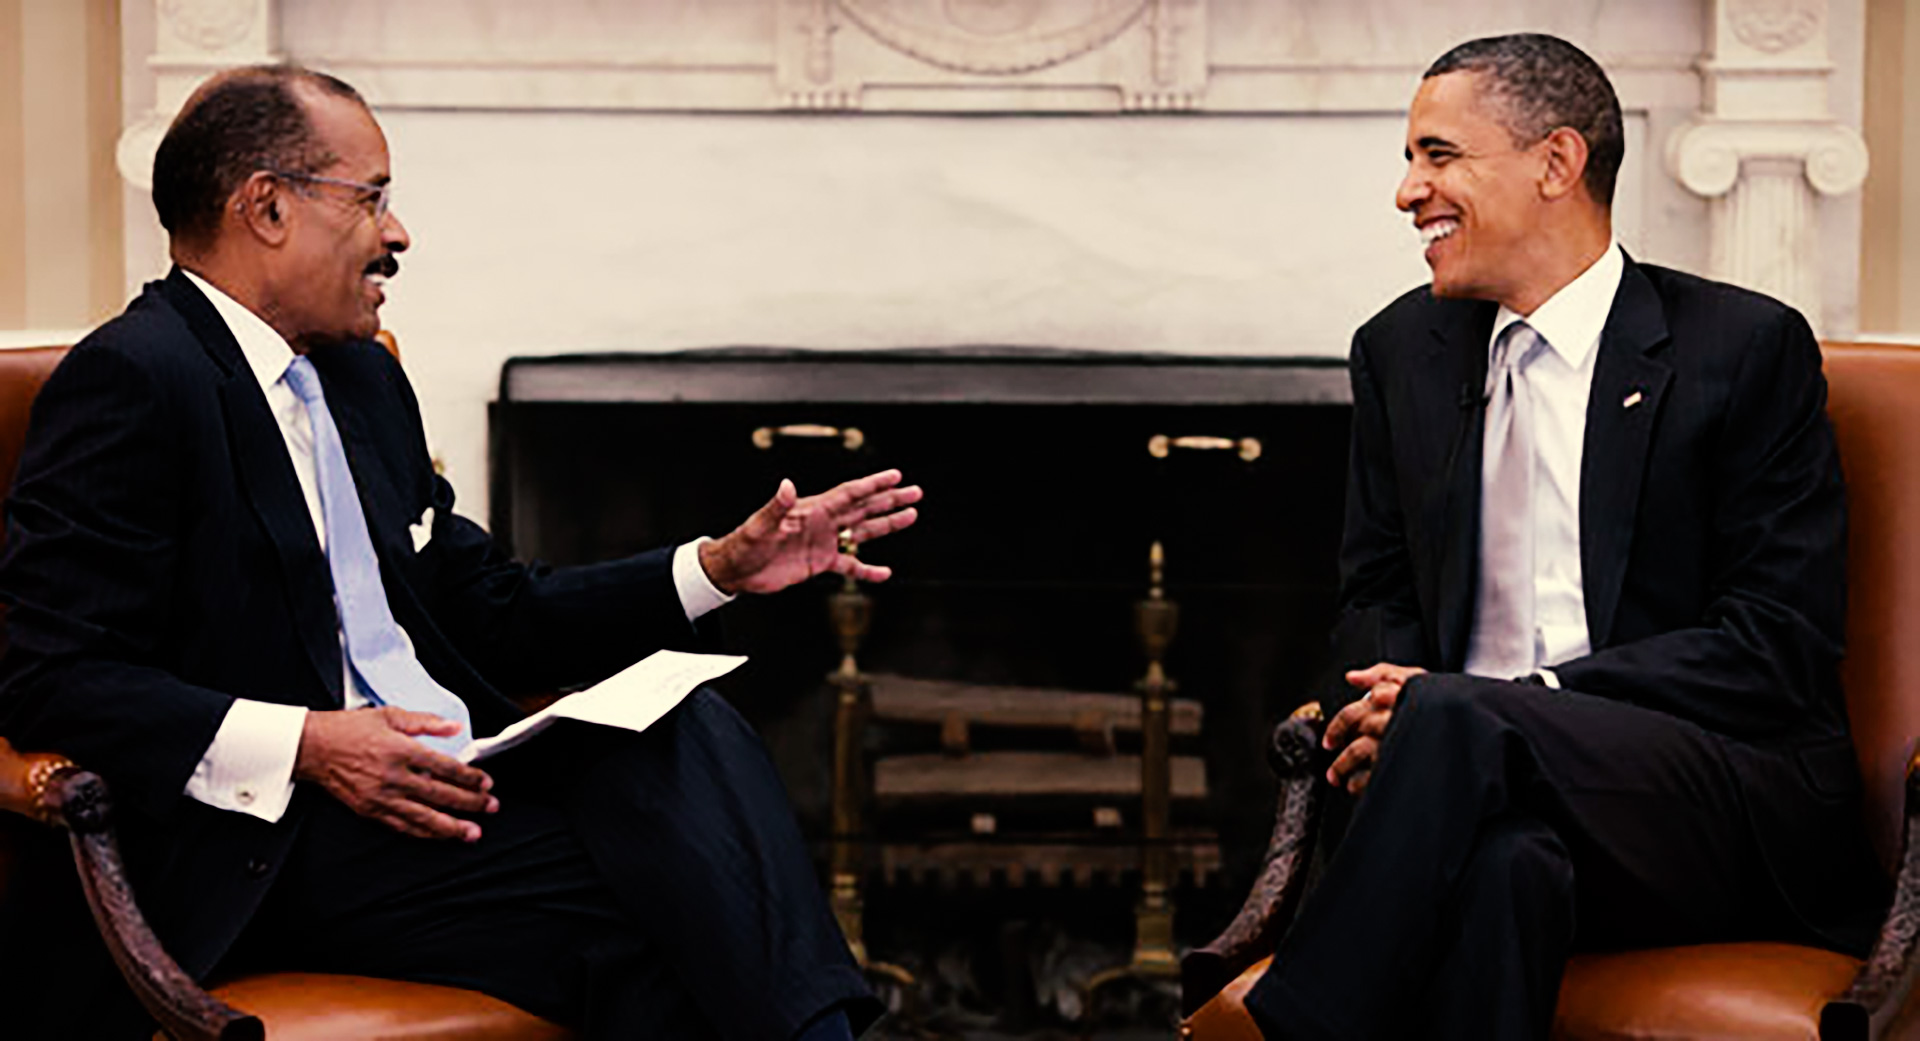 BONUS: Interviewing Obama